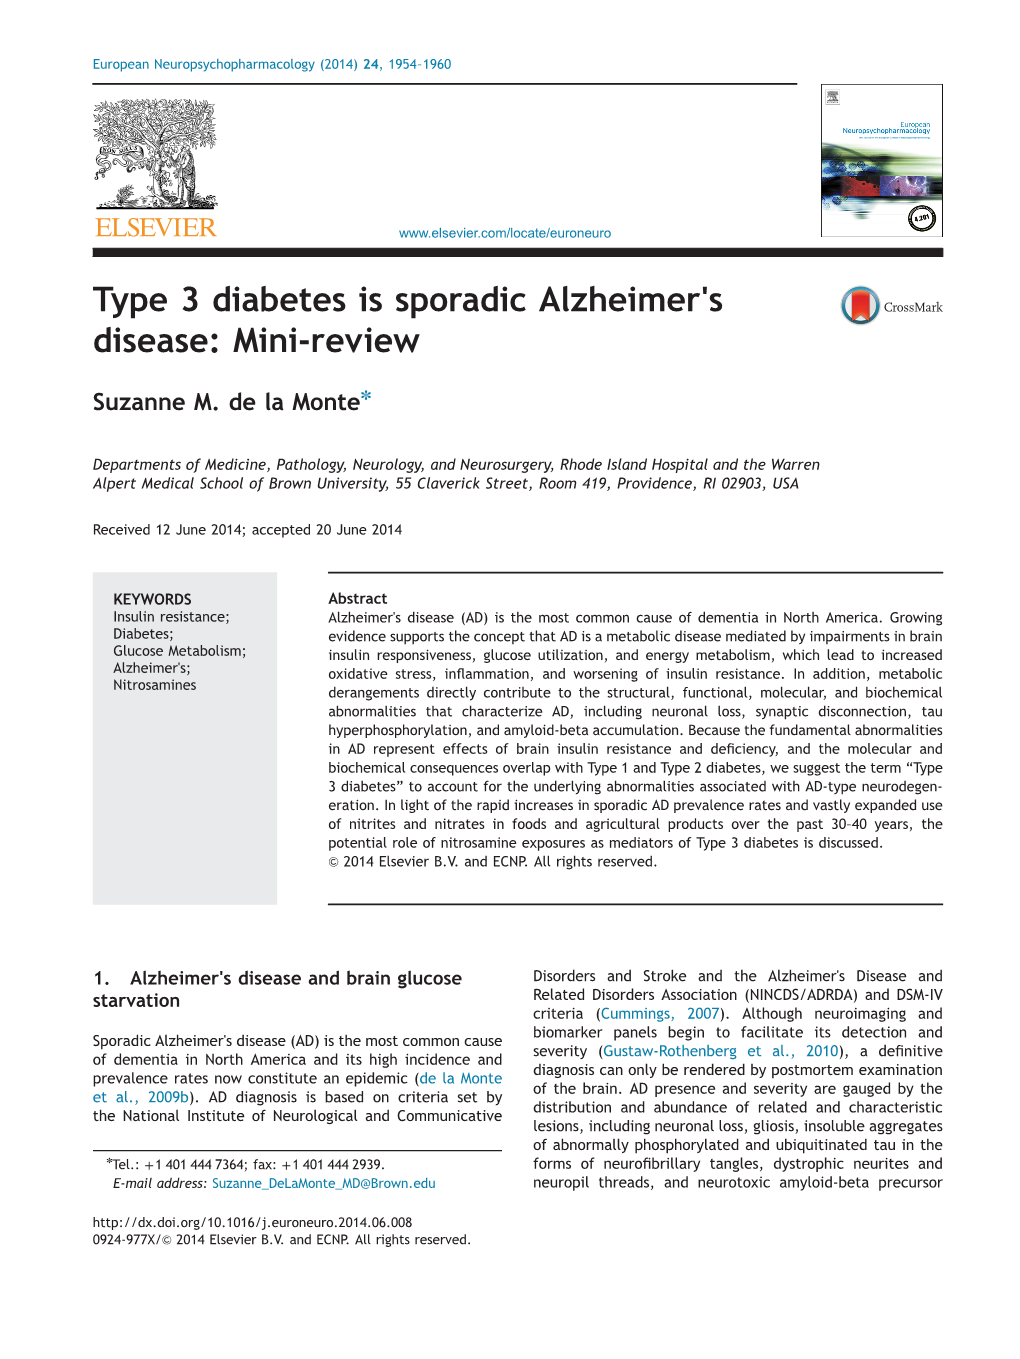 Type 3 Diabetes Is Sporadic Alzheimer׳S Disease Mini-Review